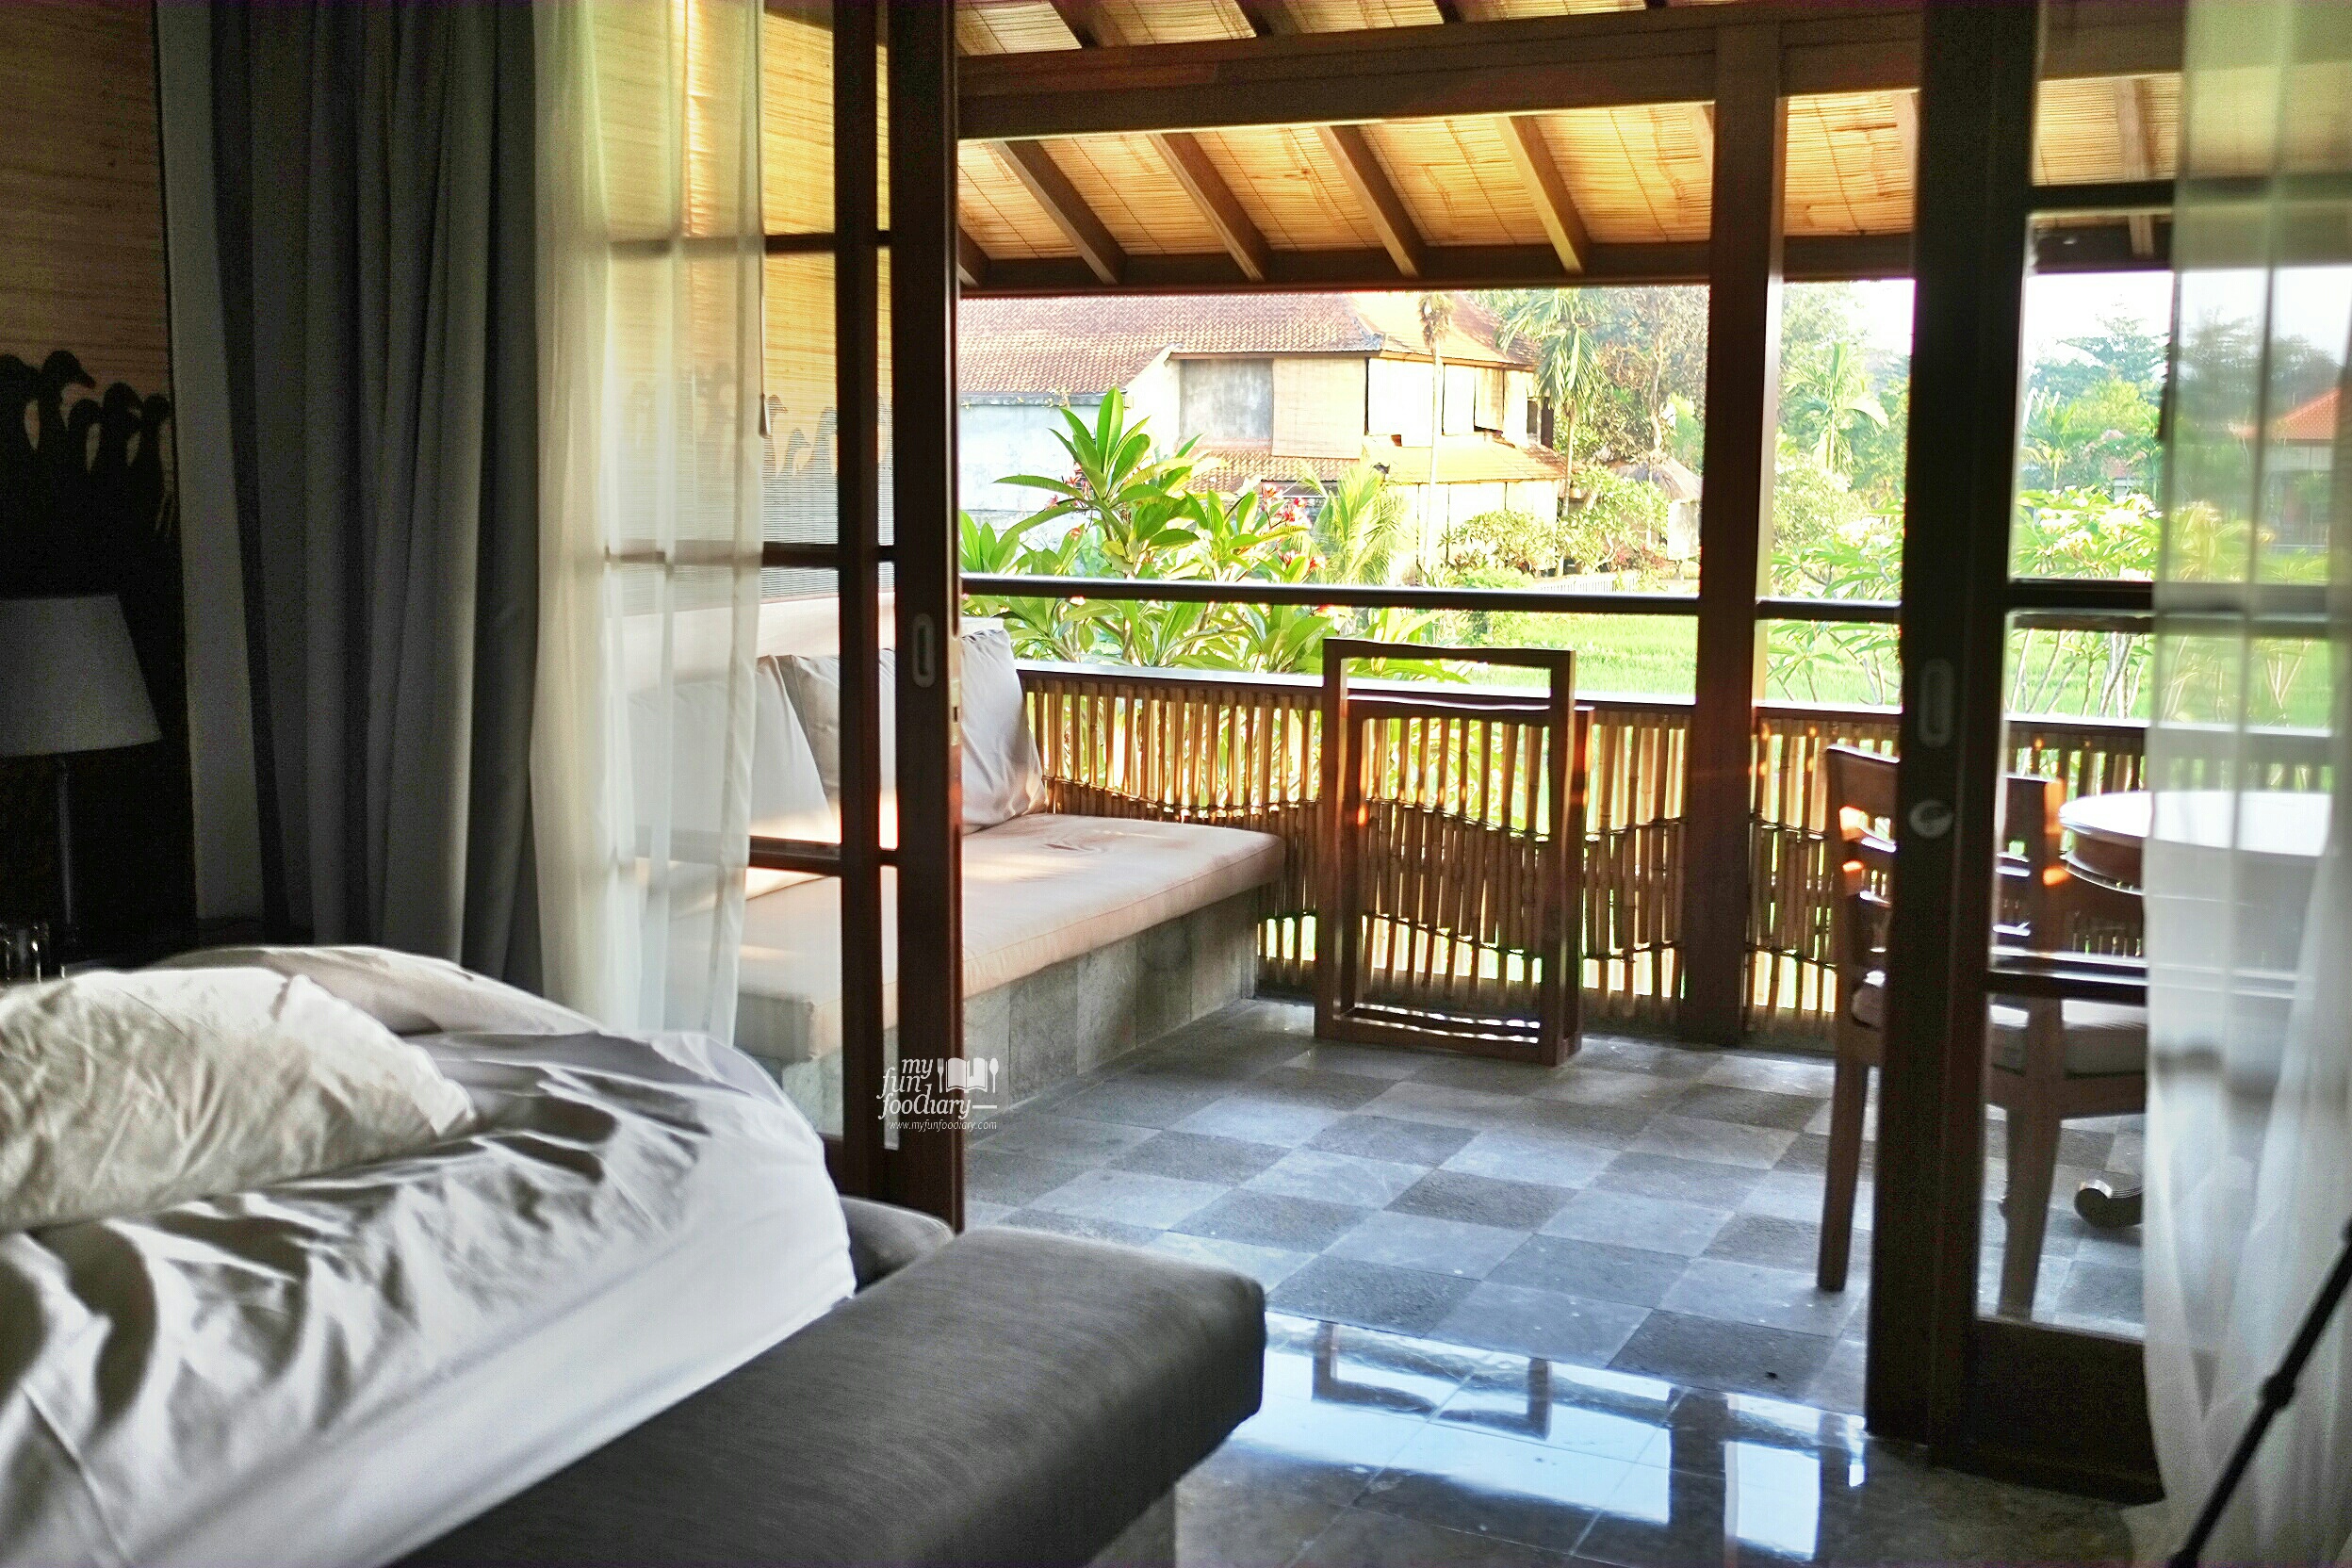 Beautiful View From My Room at Alaya Resort Ubud by Myfunfoodiary